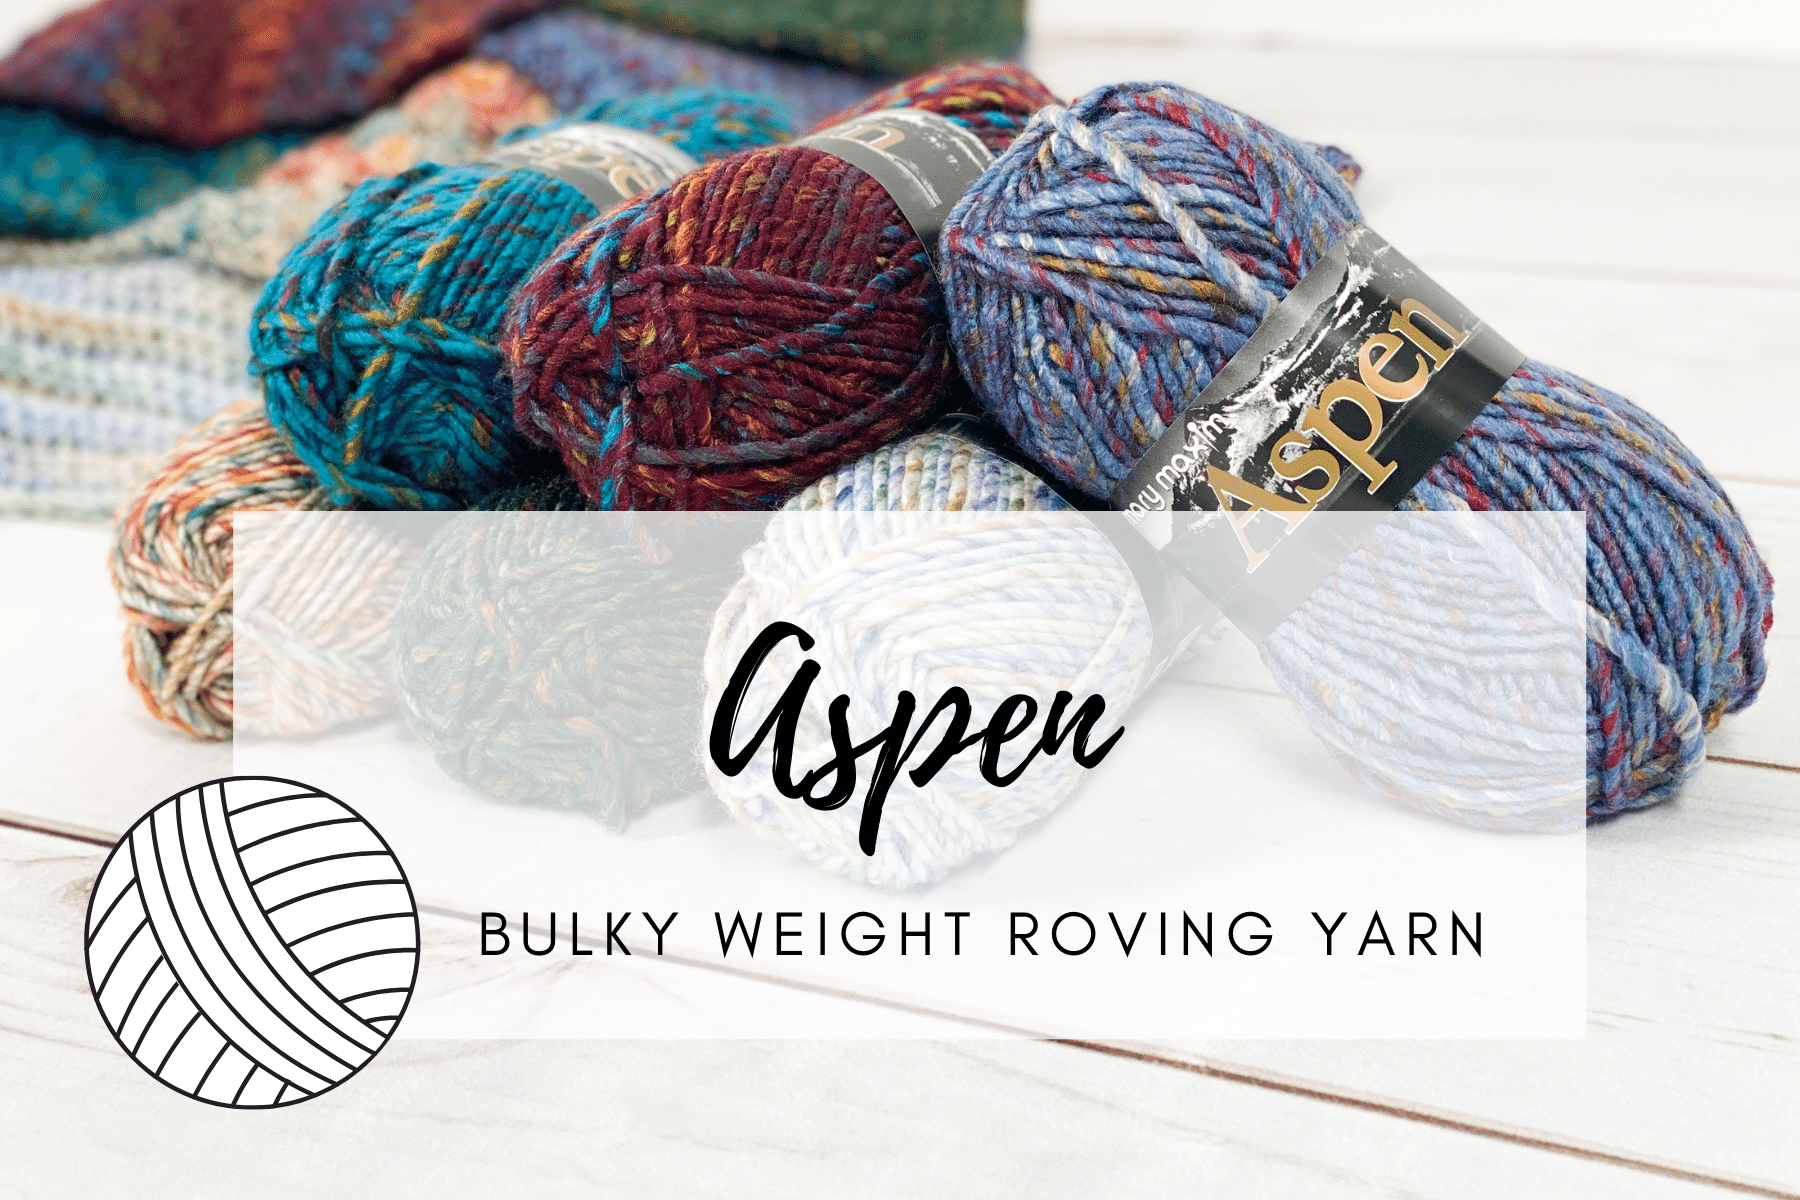 8 inch Bulky Crochet Hooks – Mary Maxim Ltd